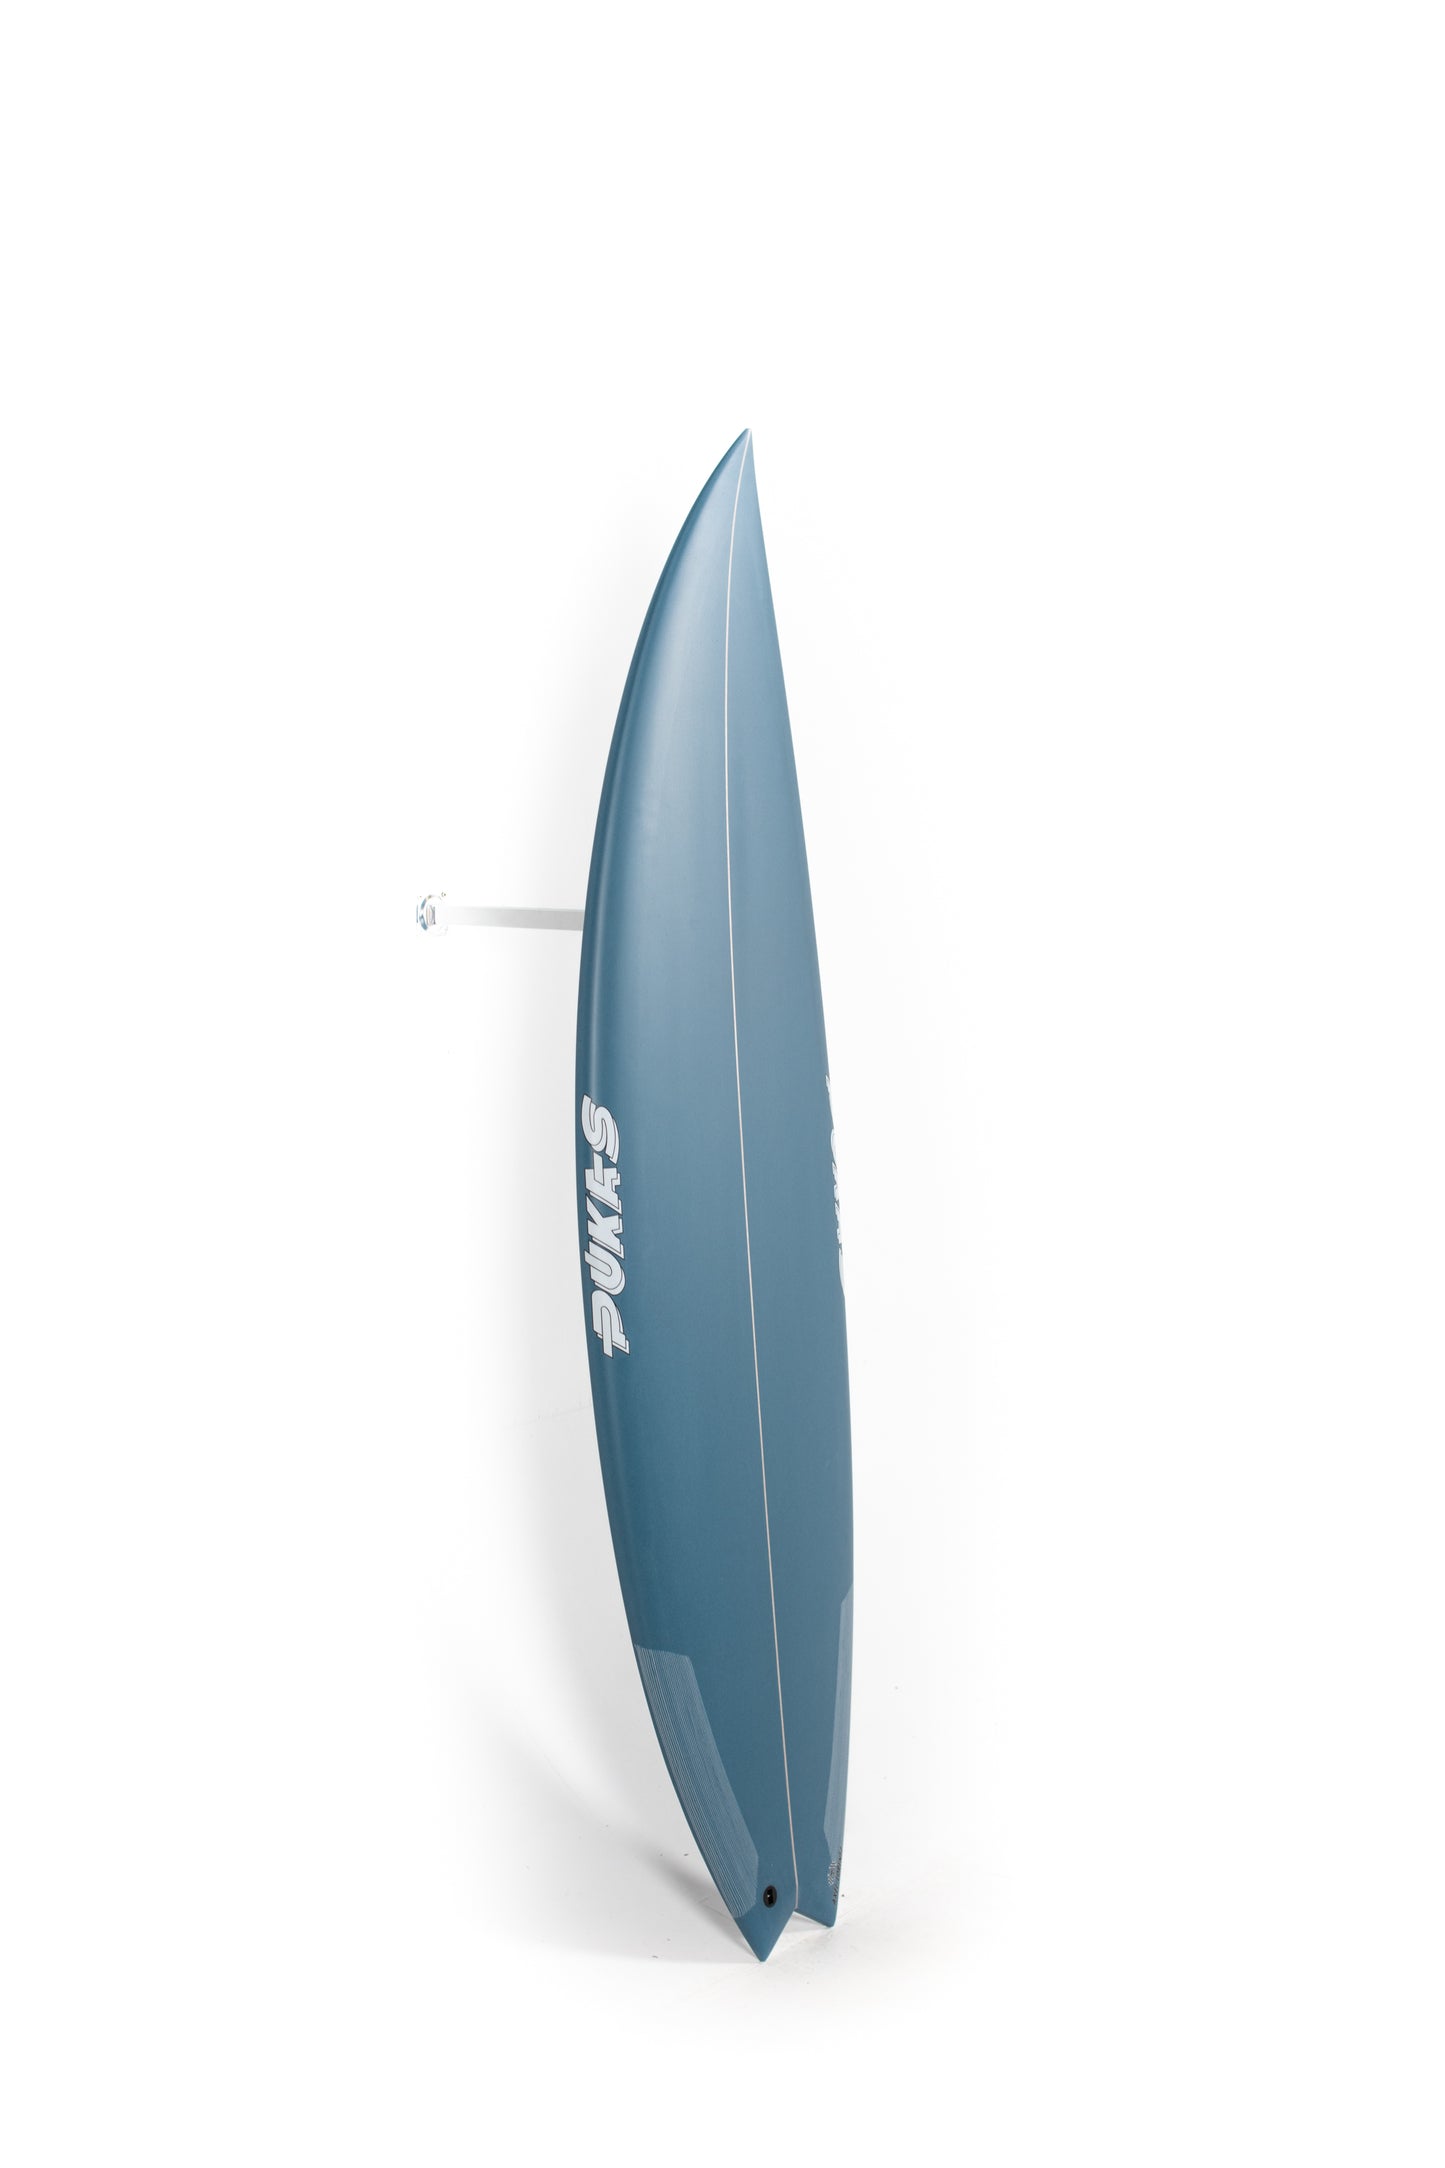 
                  
                    Pukas Surf Shop - Pukas Surfboard - DARK by Axel Lorentz - 6’0” x 19,5 x 2,37 - 29,7L - AX09203
                  
                